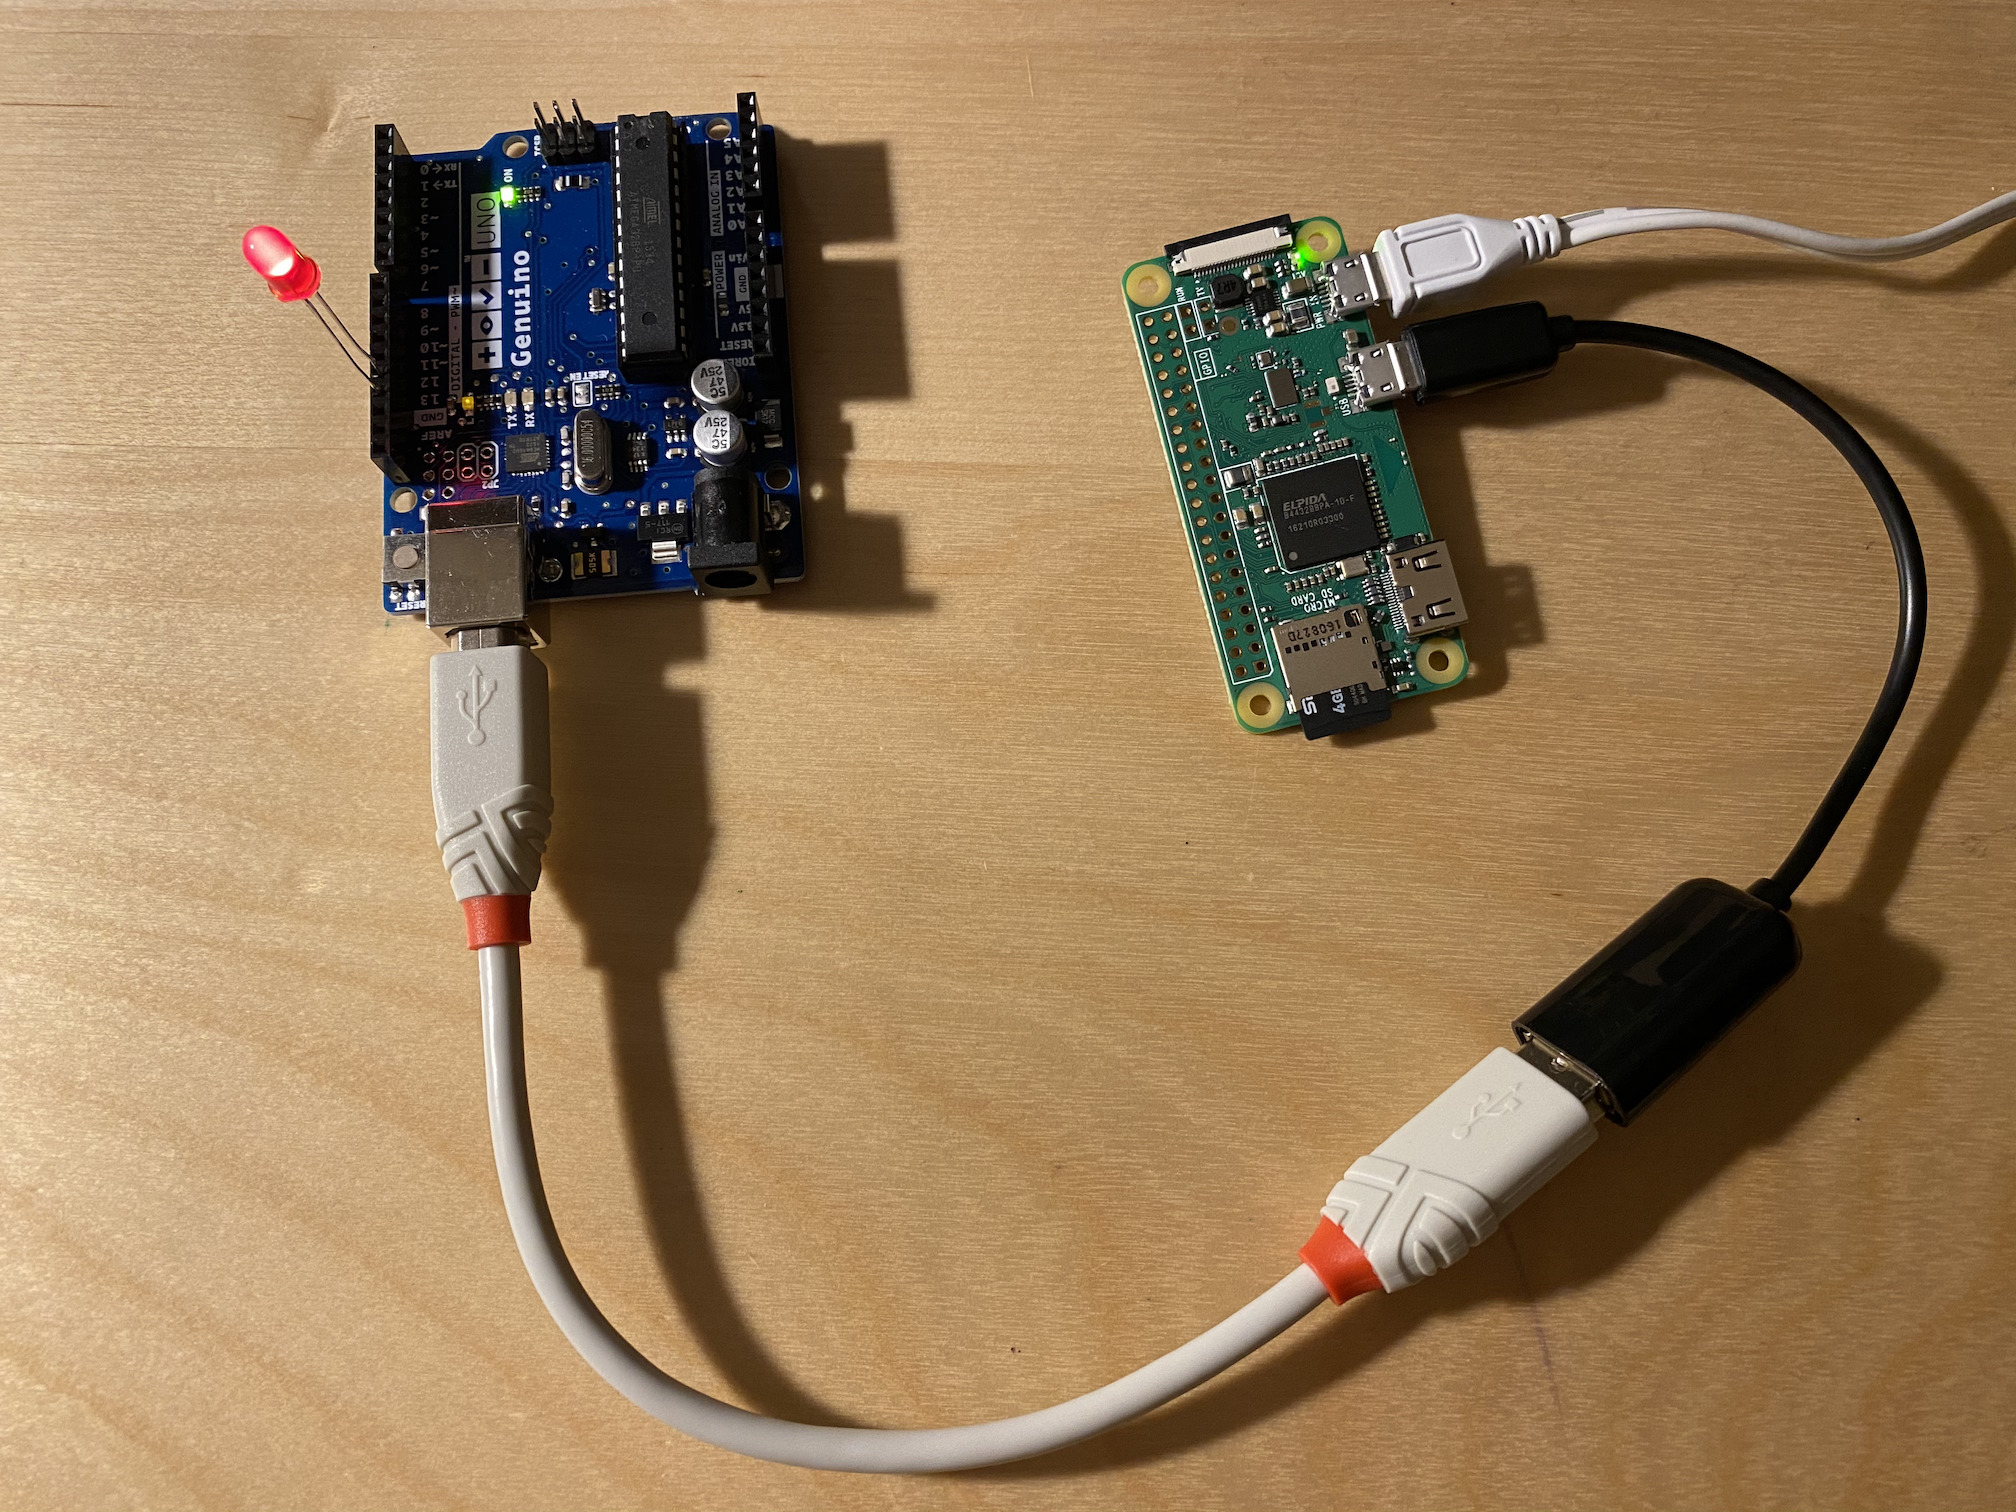 A Raspberry Pi Zero controlling an Arduino board